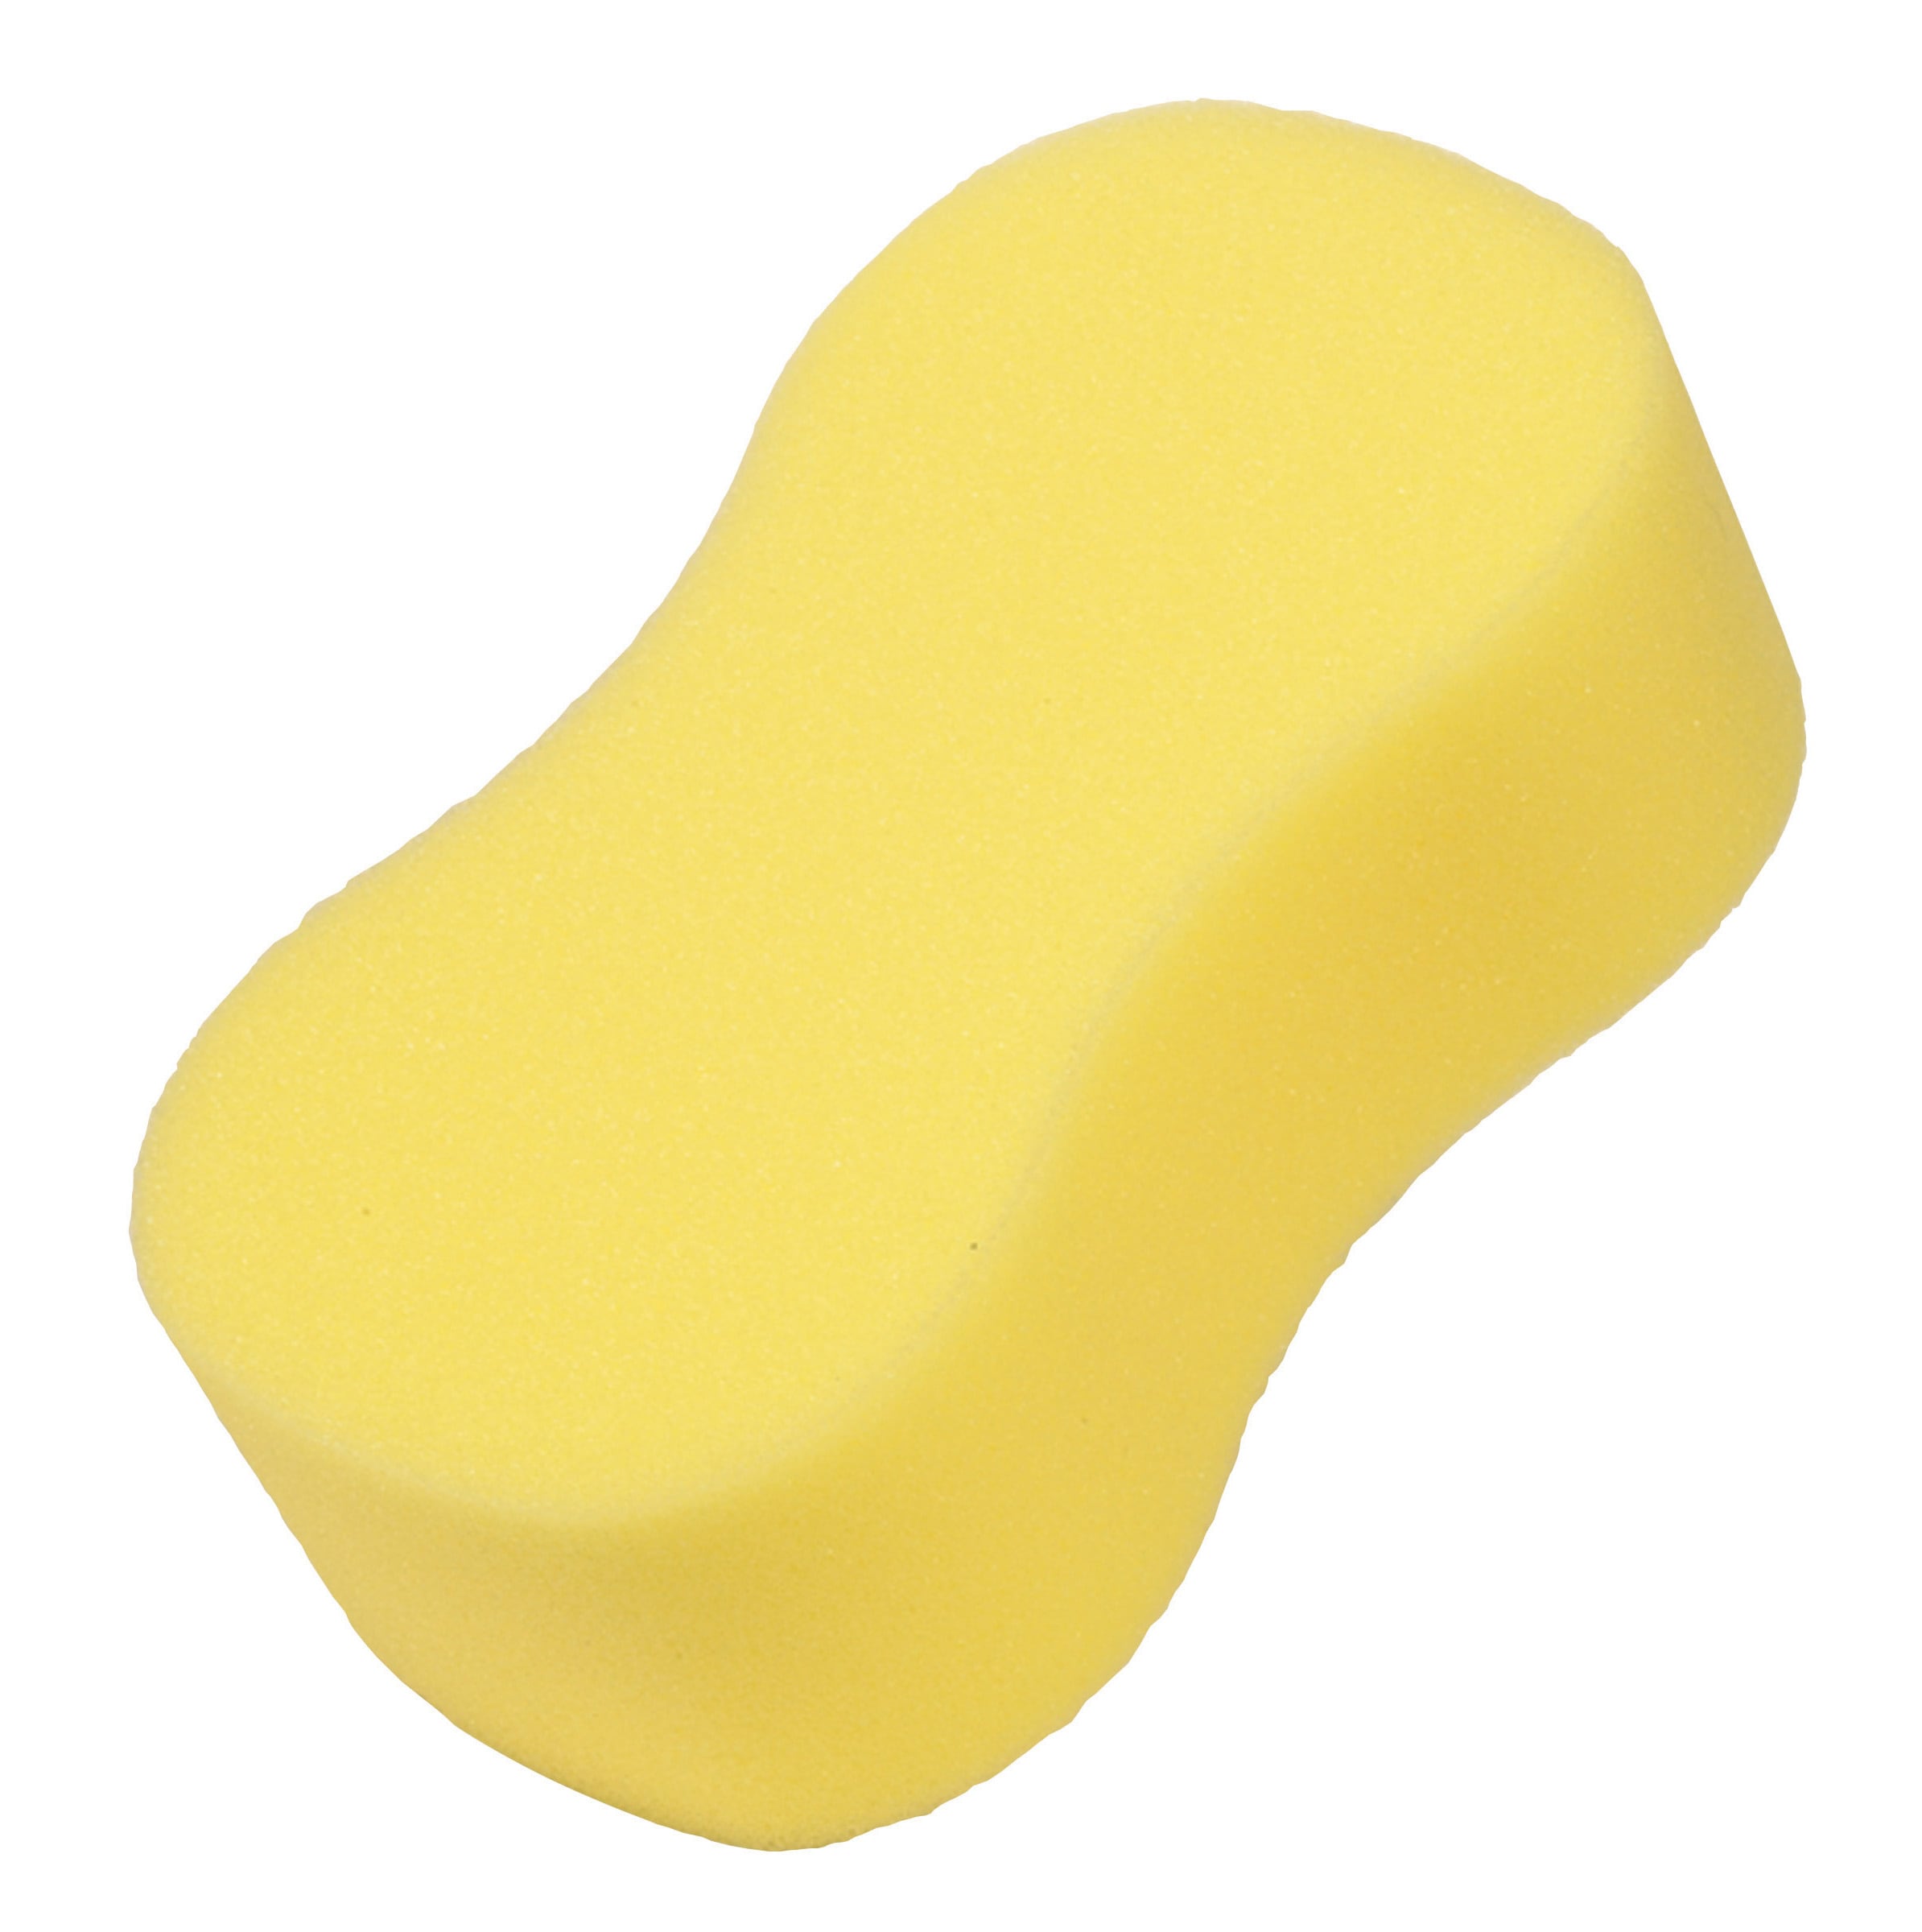 Renown Part # REN02120 - Renown Cellulose Utility Sponge Medium Yellow -  Sponges & Stain Erasers - Home Depot Pro